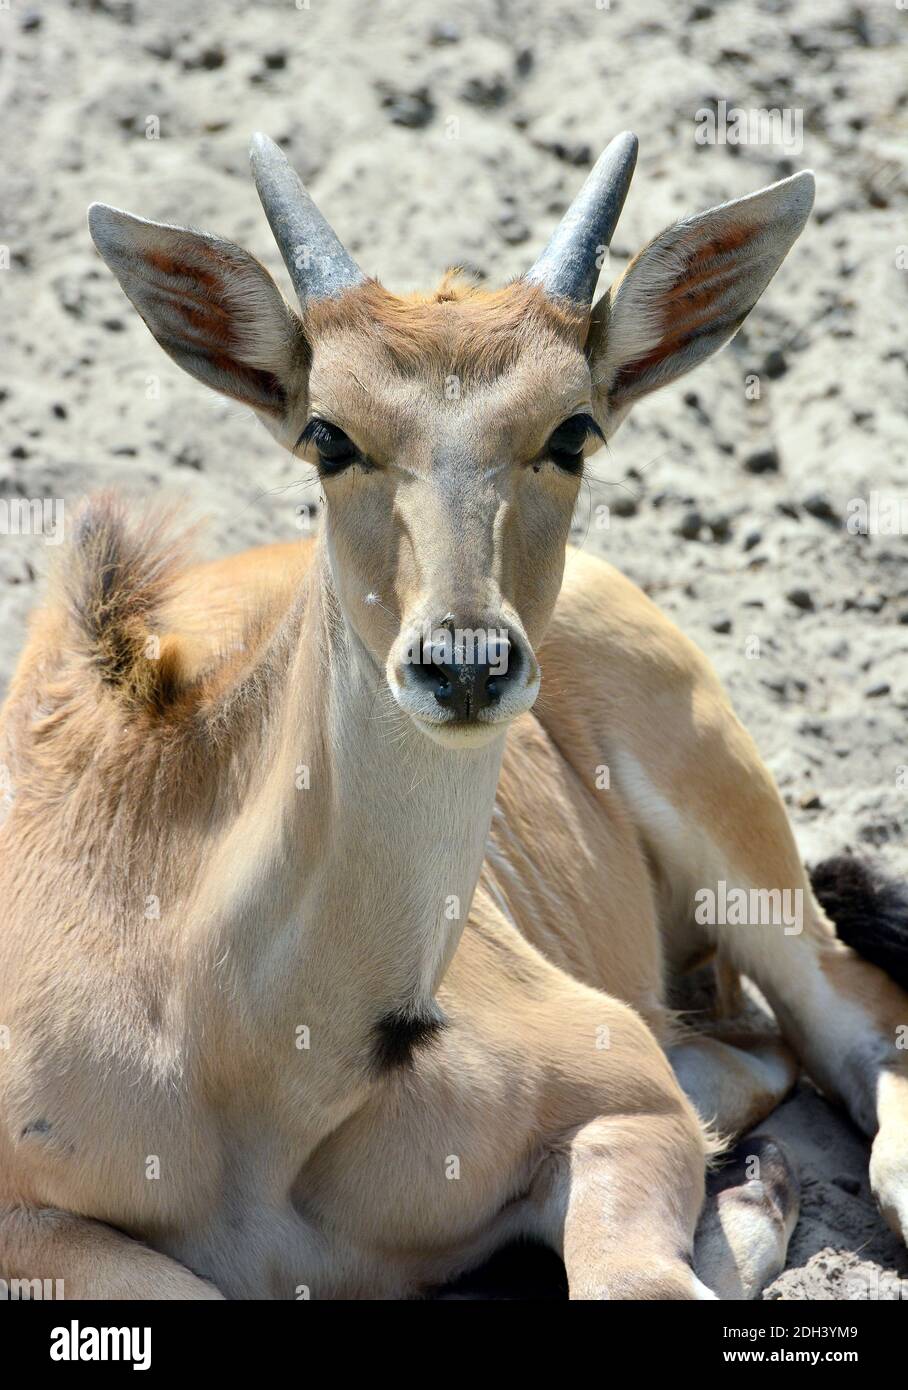 Common eland, southern eland or eland antelope, Elenantilope, Taurotragus oryx, jávorantilop Stock Photo